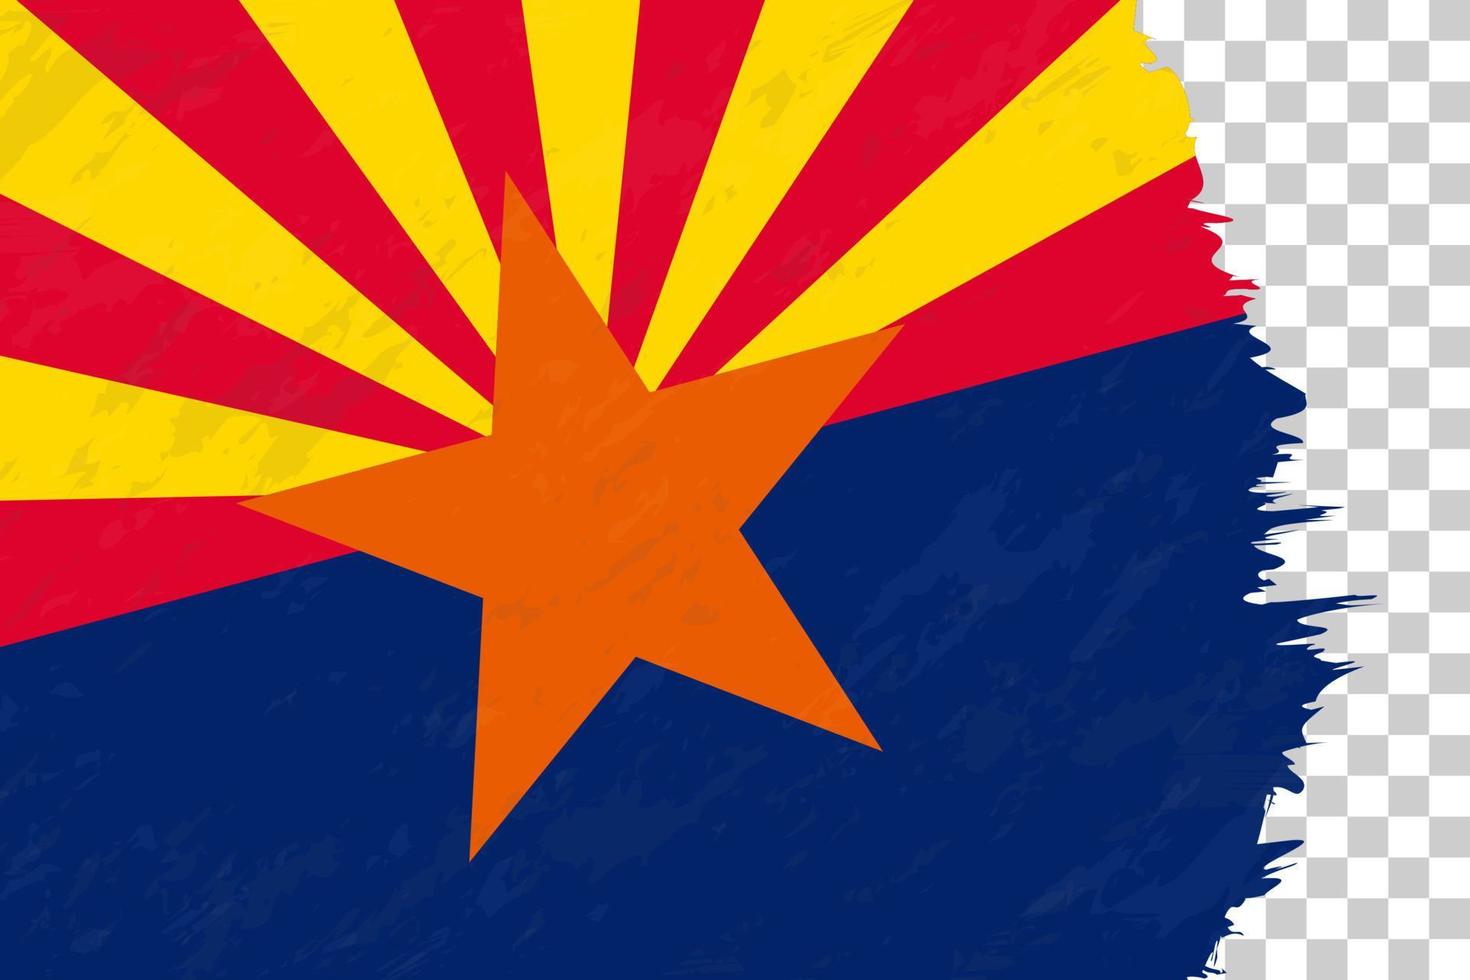 Horizontal Abstract Grunge Brushed Flag of Arizona on Transparent Grid. vector